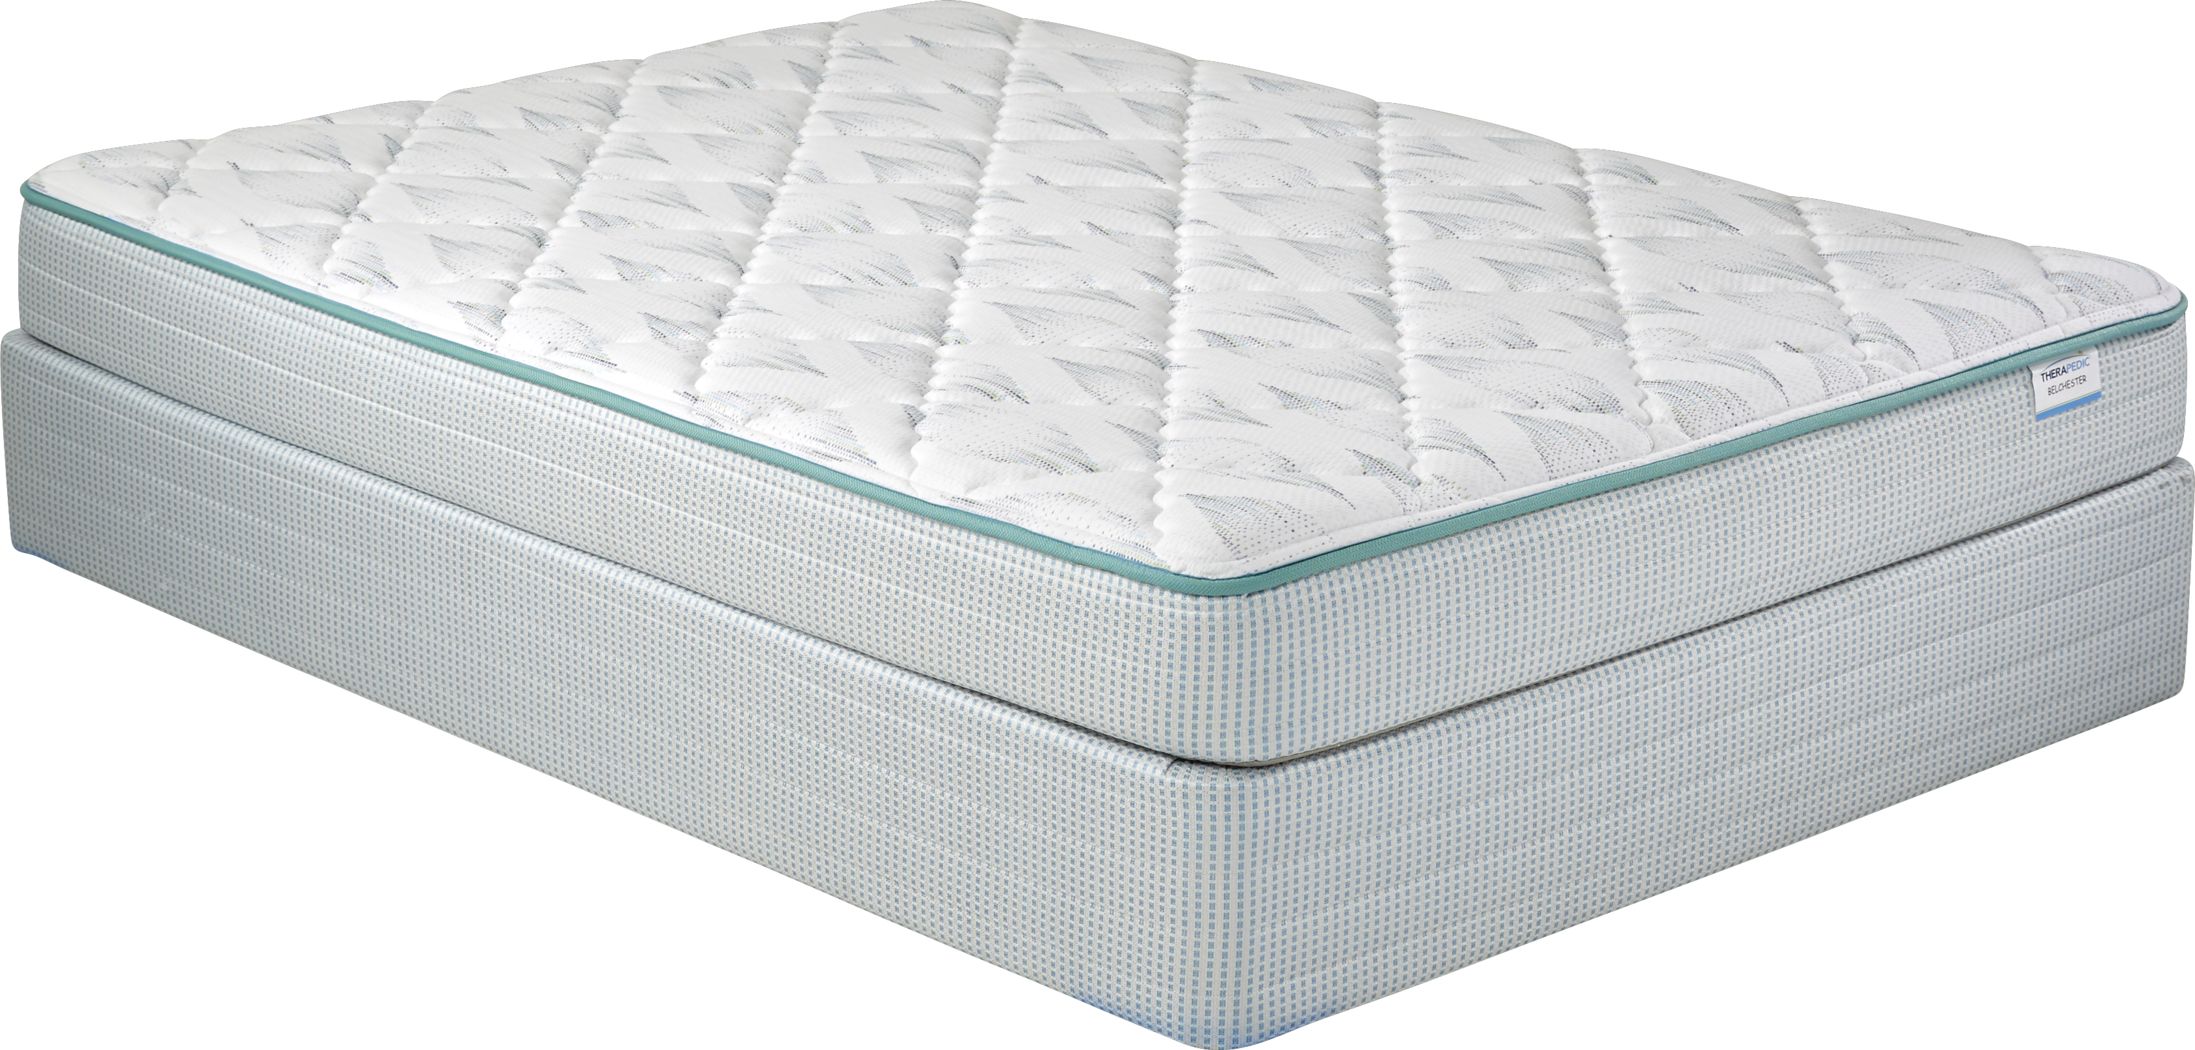 therapedic deluxe full mattress topper